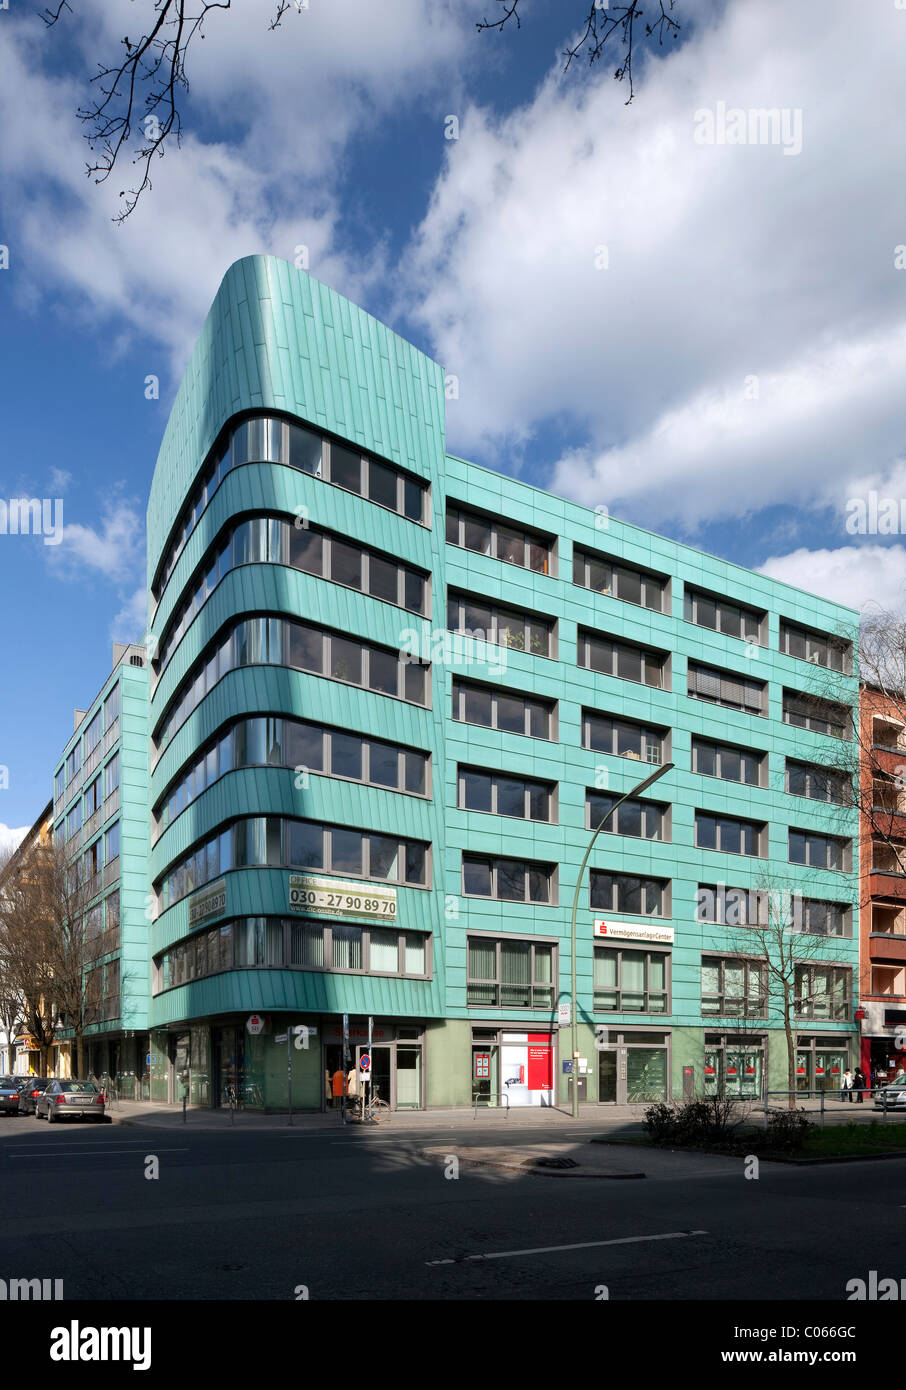 Immeuble de bureaux modernes, Moabit, Tiergarten, Berlin, Germany, Europe Banque D'Images